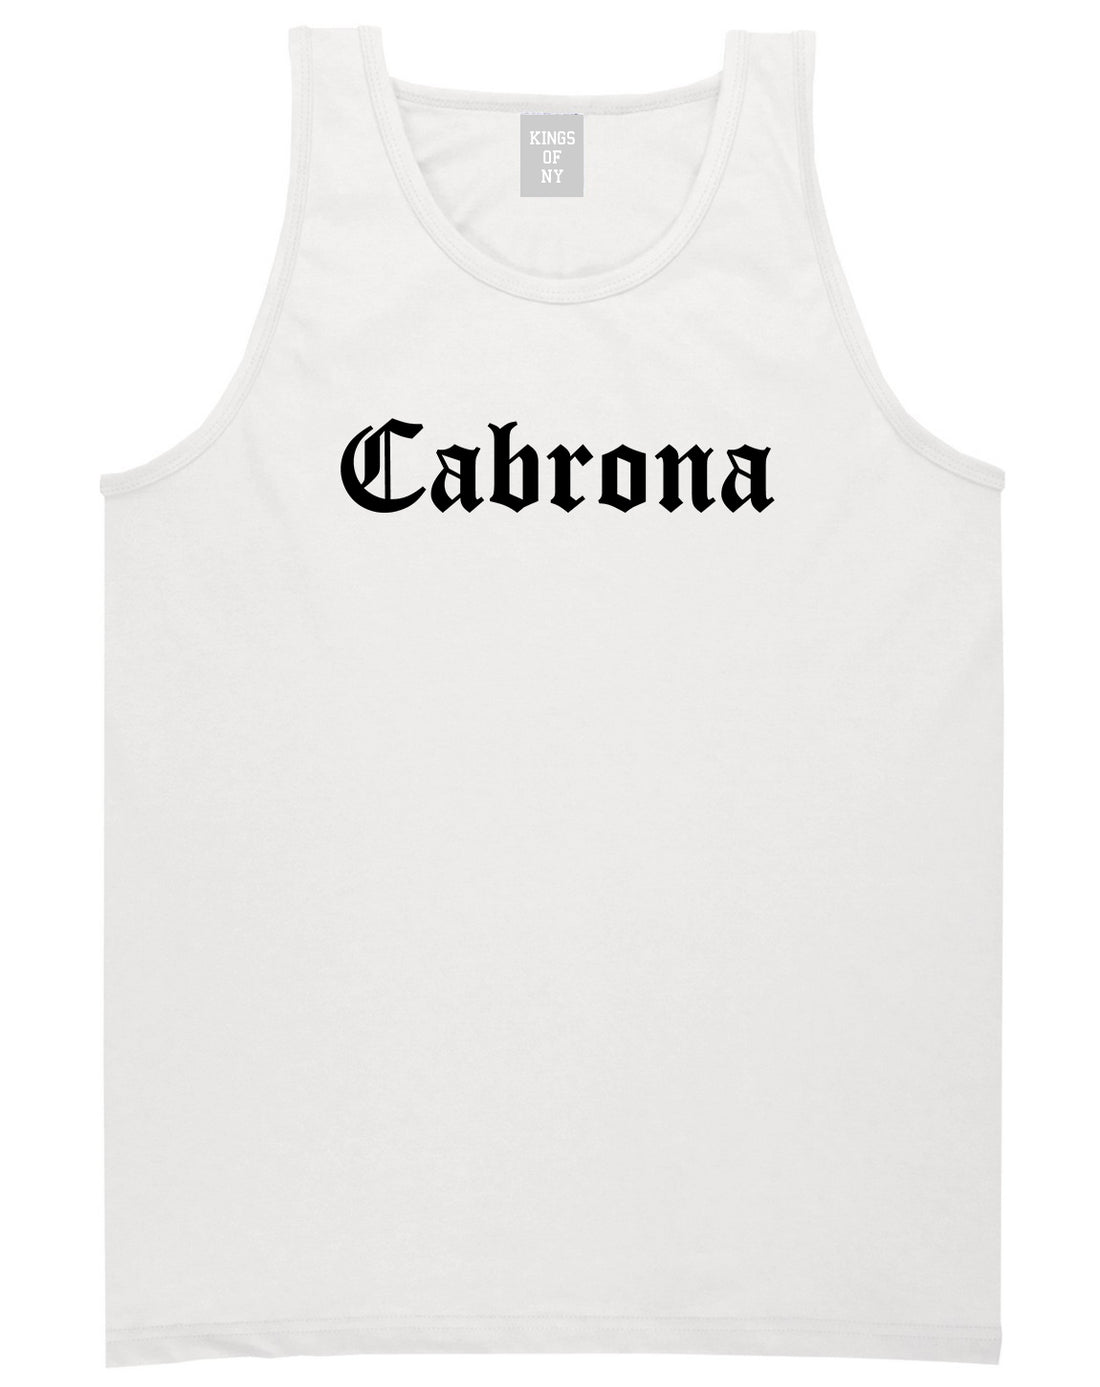 Cabrona Spanish Mens Tank Top Shirt White